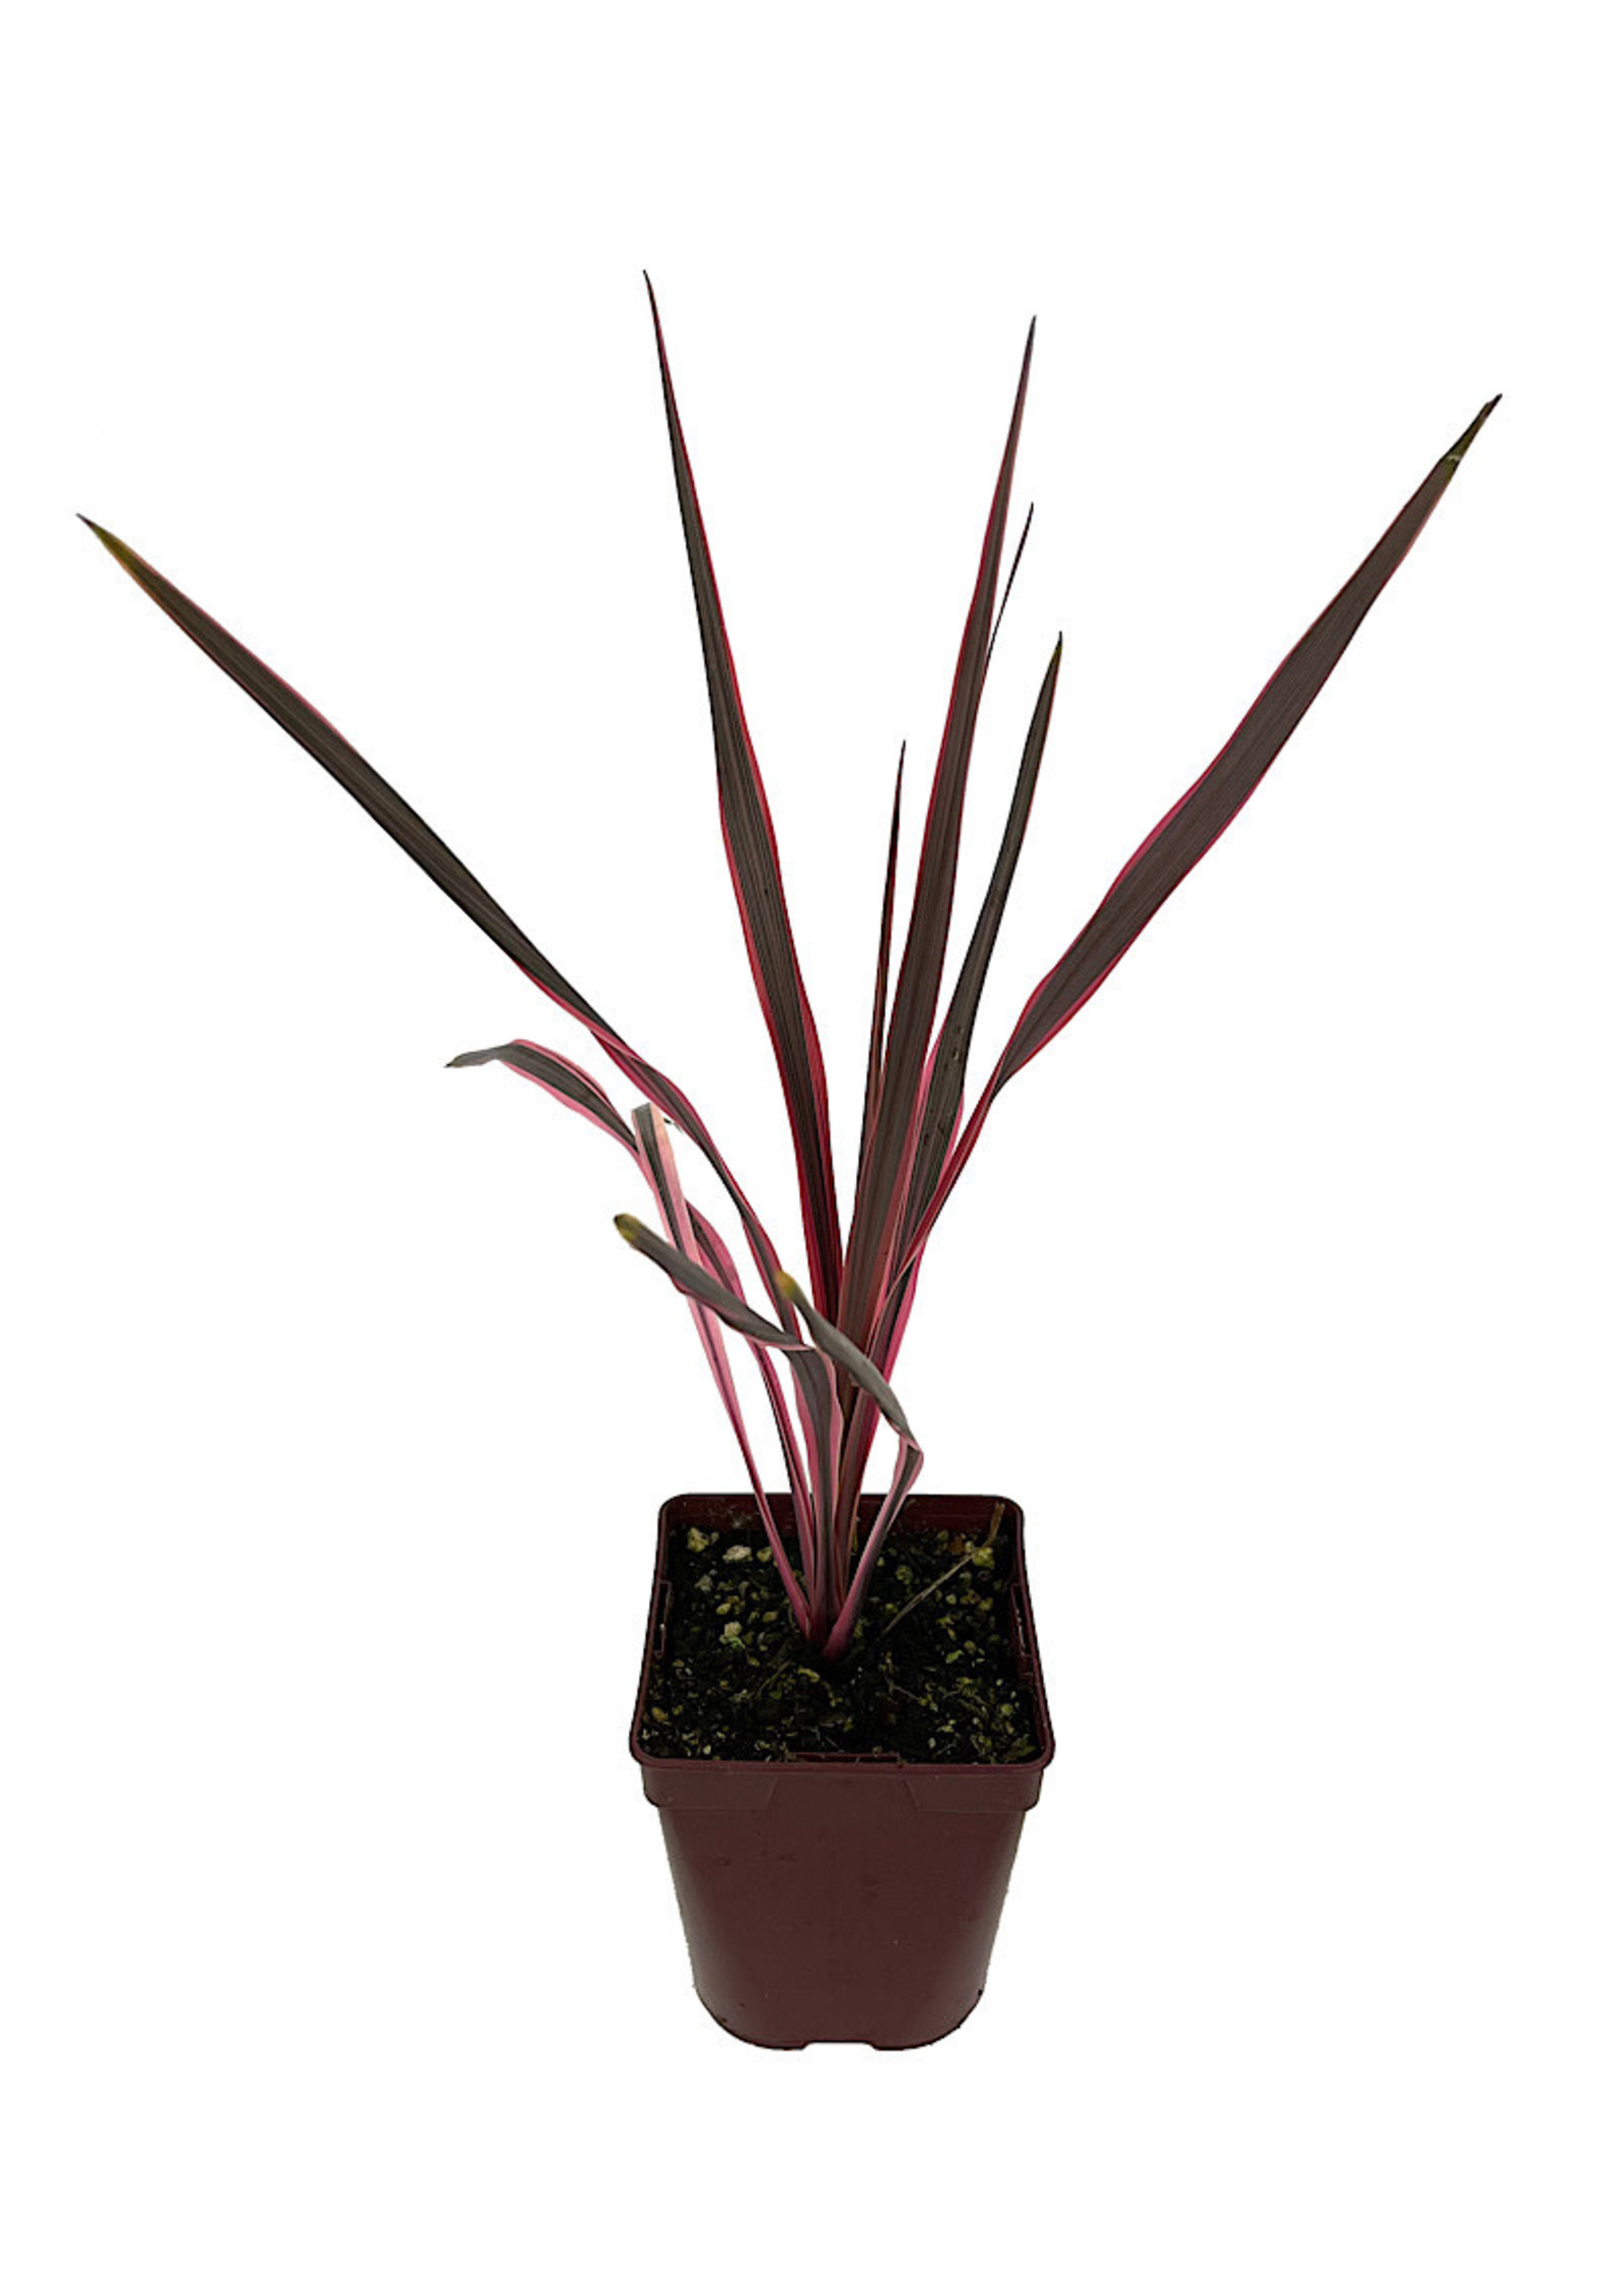 15-30cm Incl. Pot Cabbage Palm Evergreen Potted Grassy Shrub Cordyline Southern Splendour